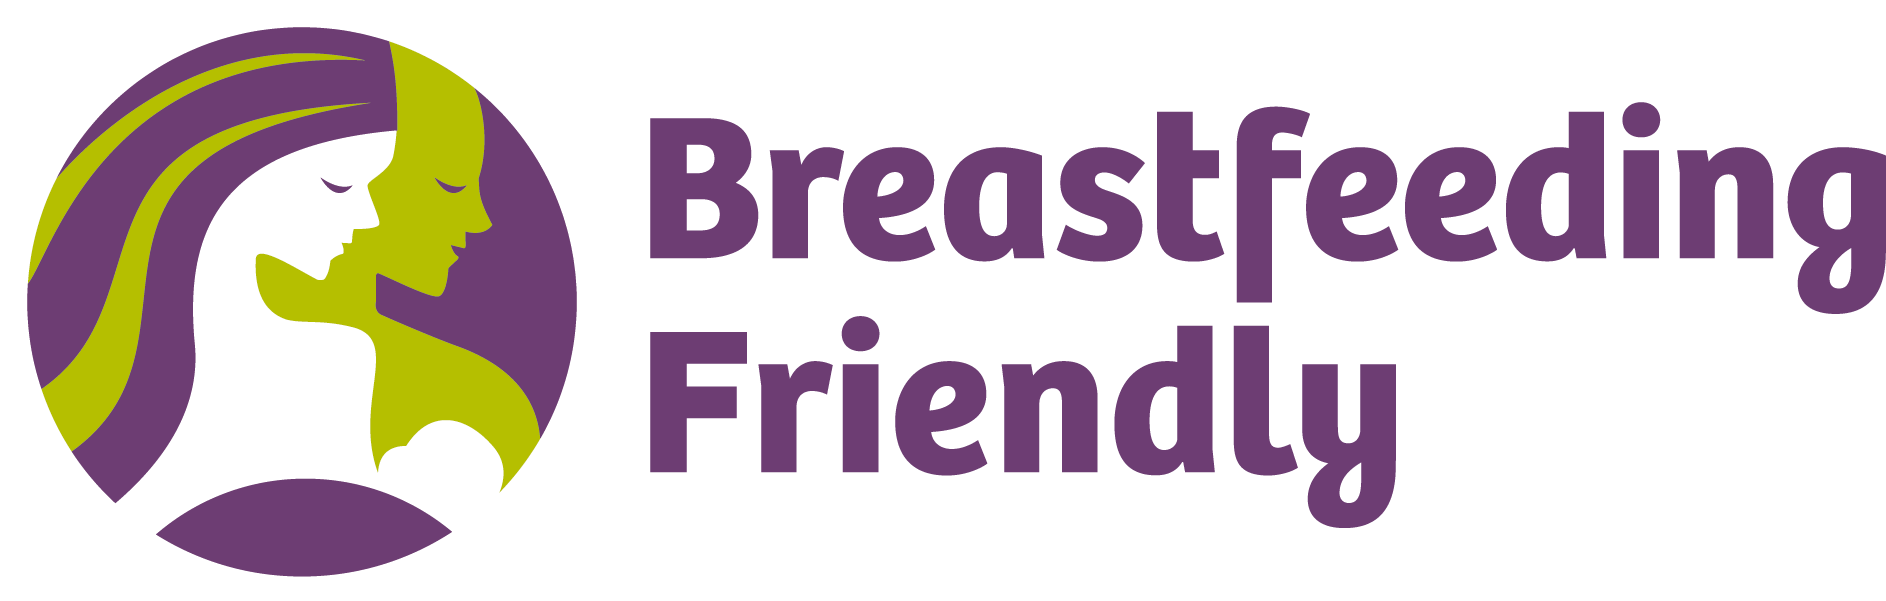 Breastfeeding Friendly Signage PNG